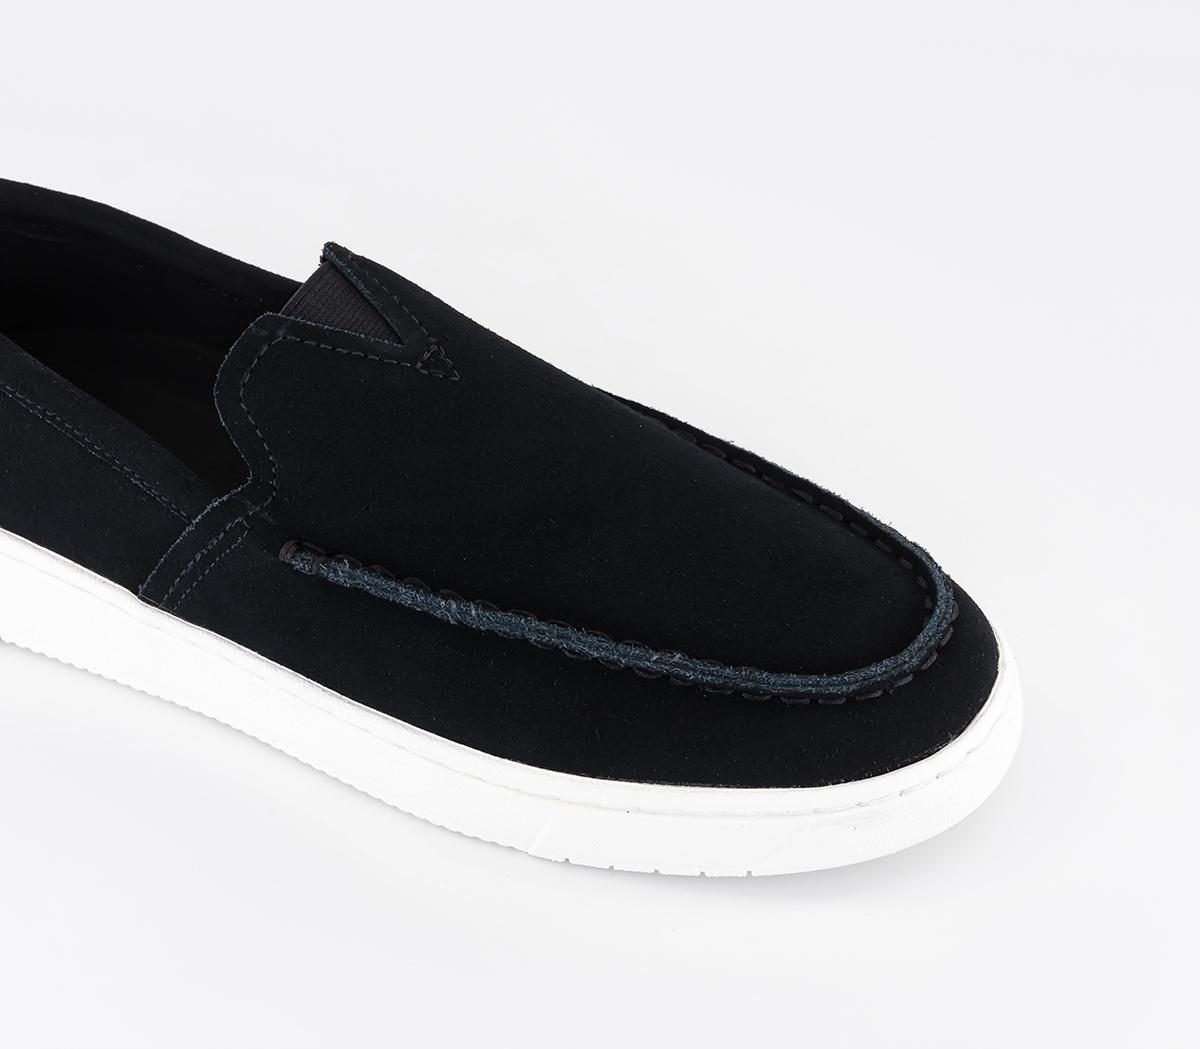 TOMS Trvl Lite Loafers Black Suede - Men’s Smart Shoes